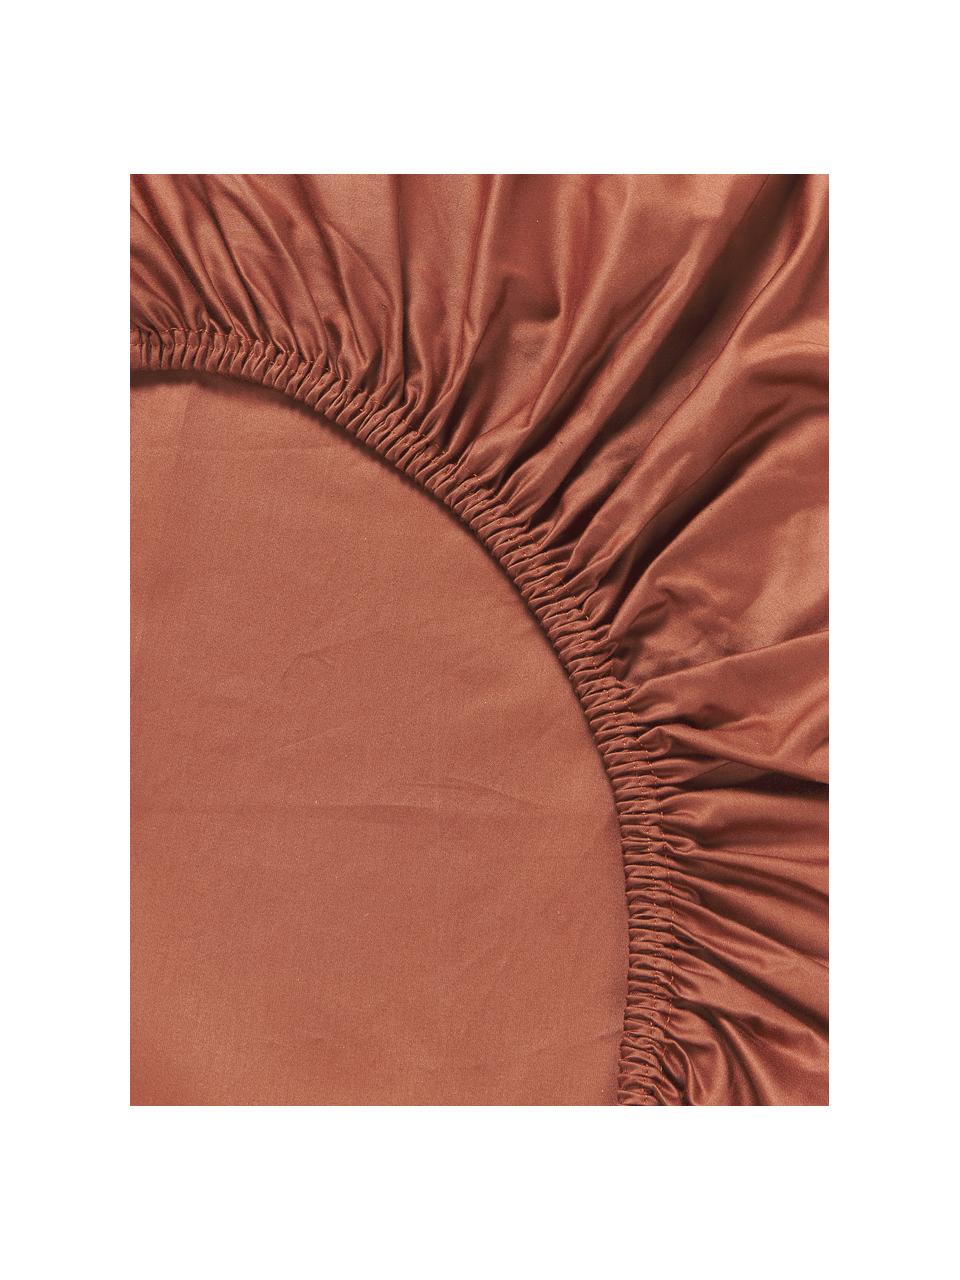 Sábana bajera cubrecolchón de satén Premium, Terracota, Cama 135/140 cm (140 x 200 x 15 cm)